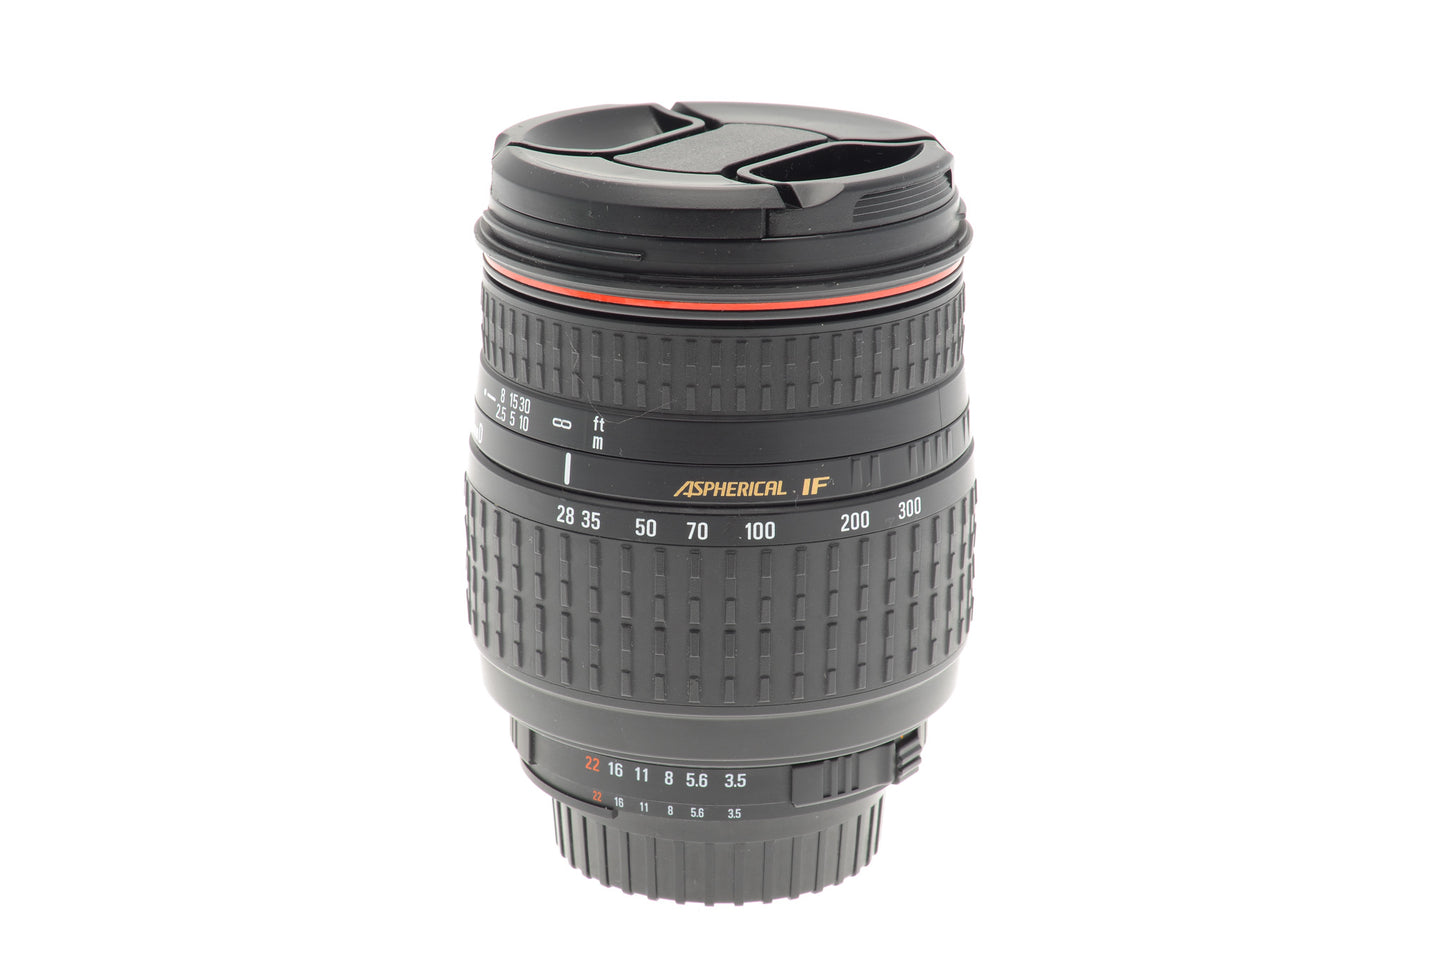 Sigma 28-300mm f3.5-6.3 D Aspherical IF - Lens